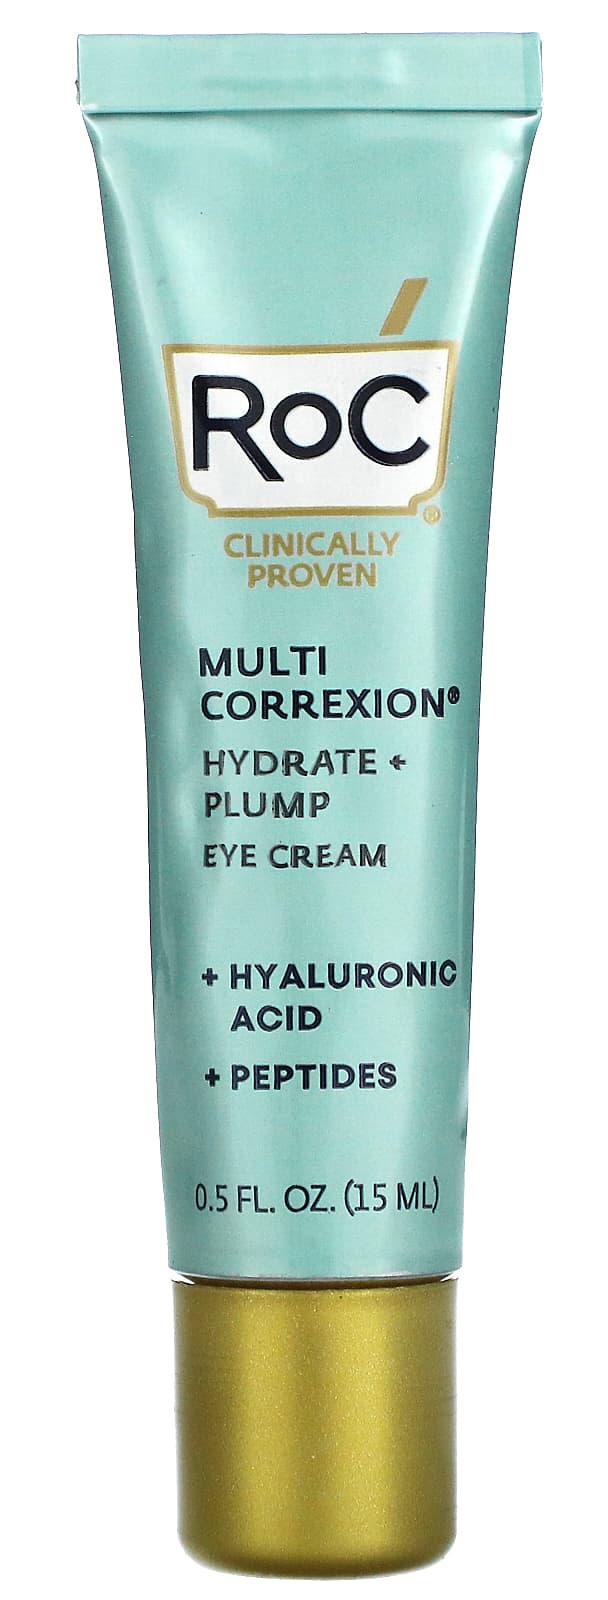 RoC Multi Correxion Hydrate + Plump Hyaluronic Acid Eye Cream